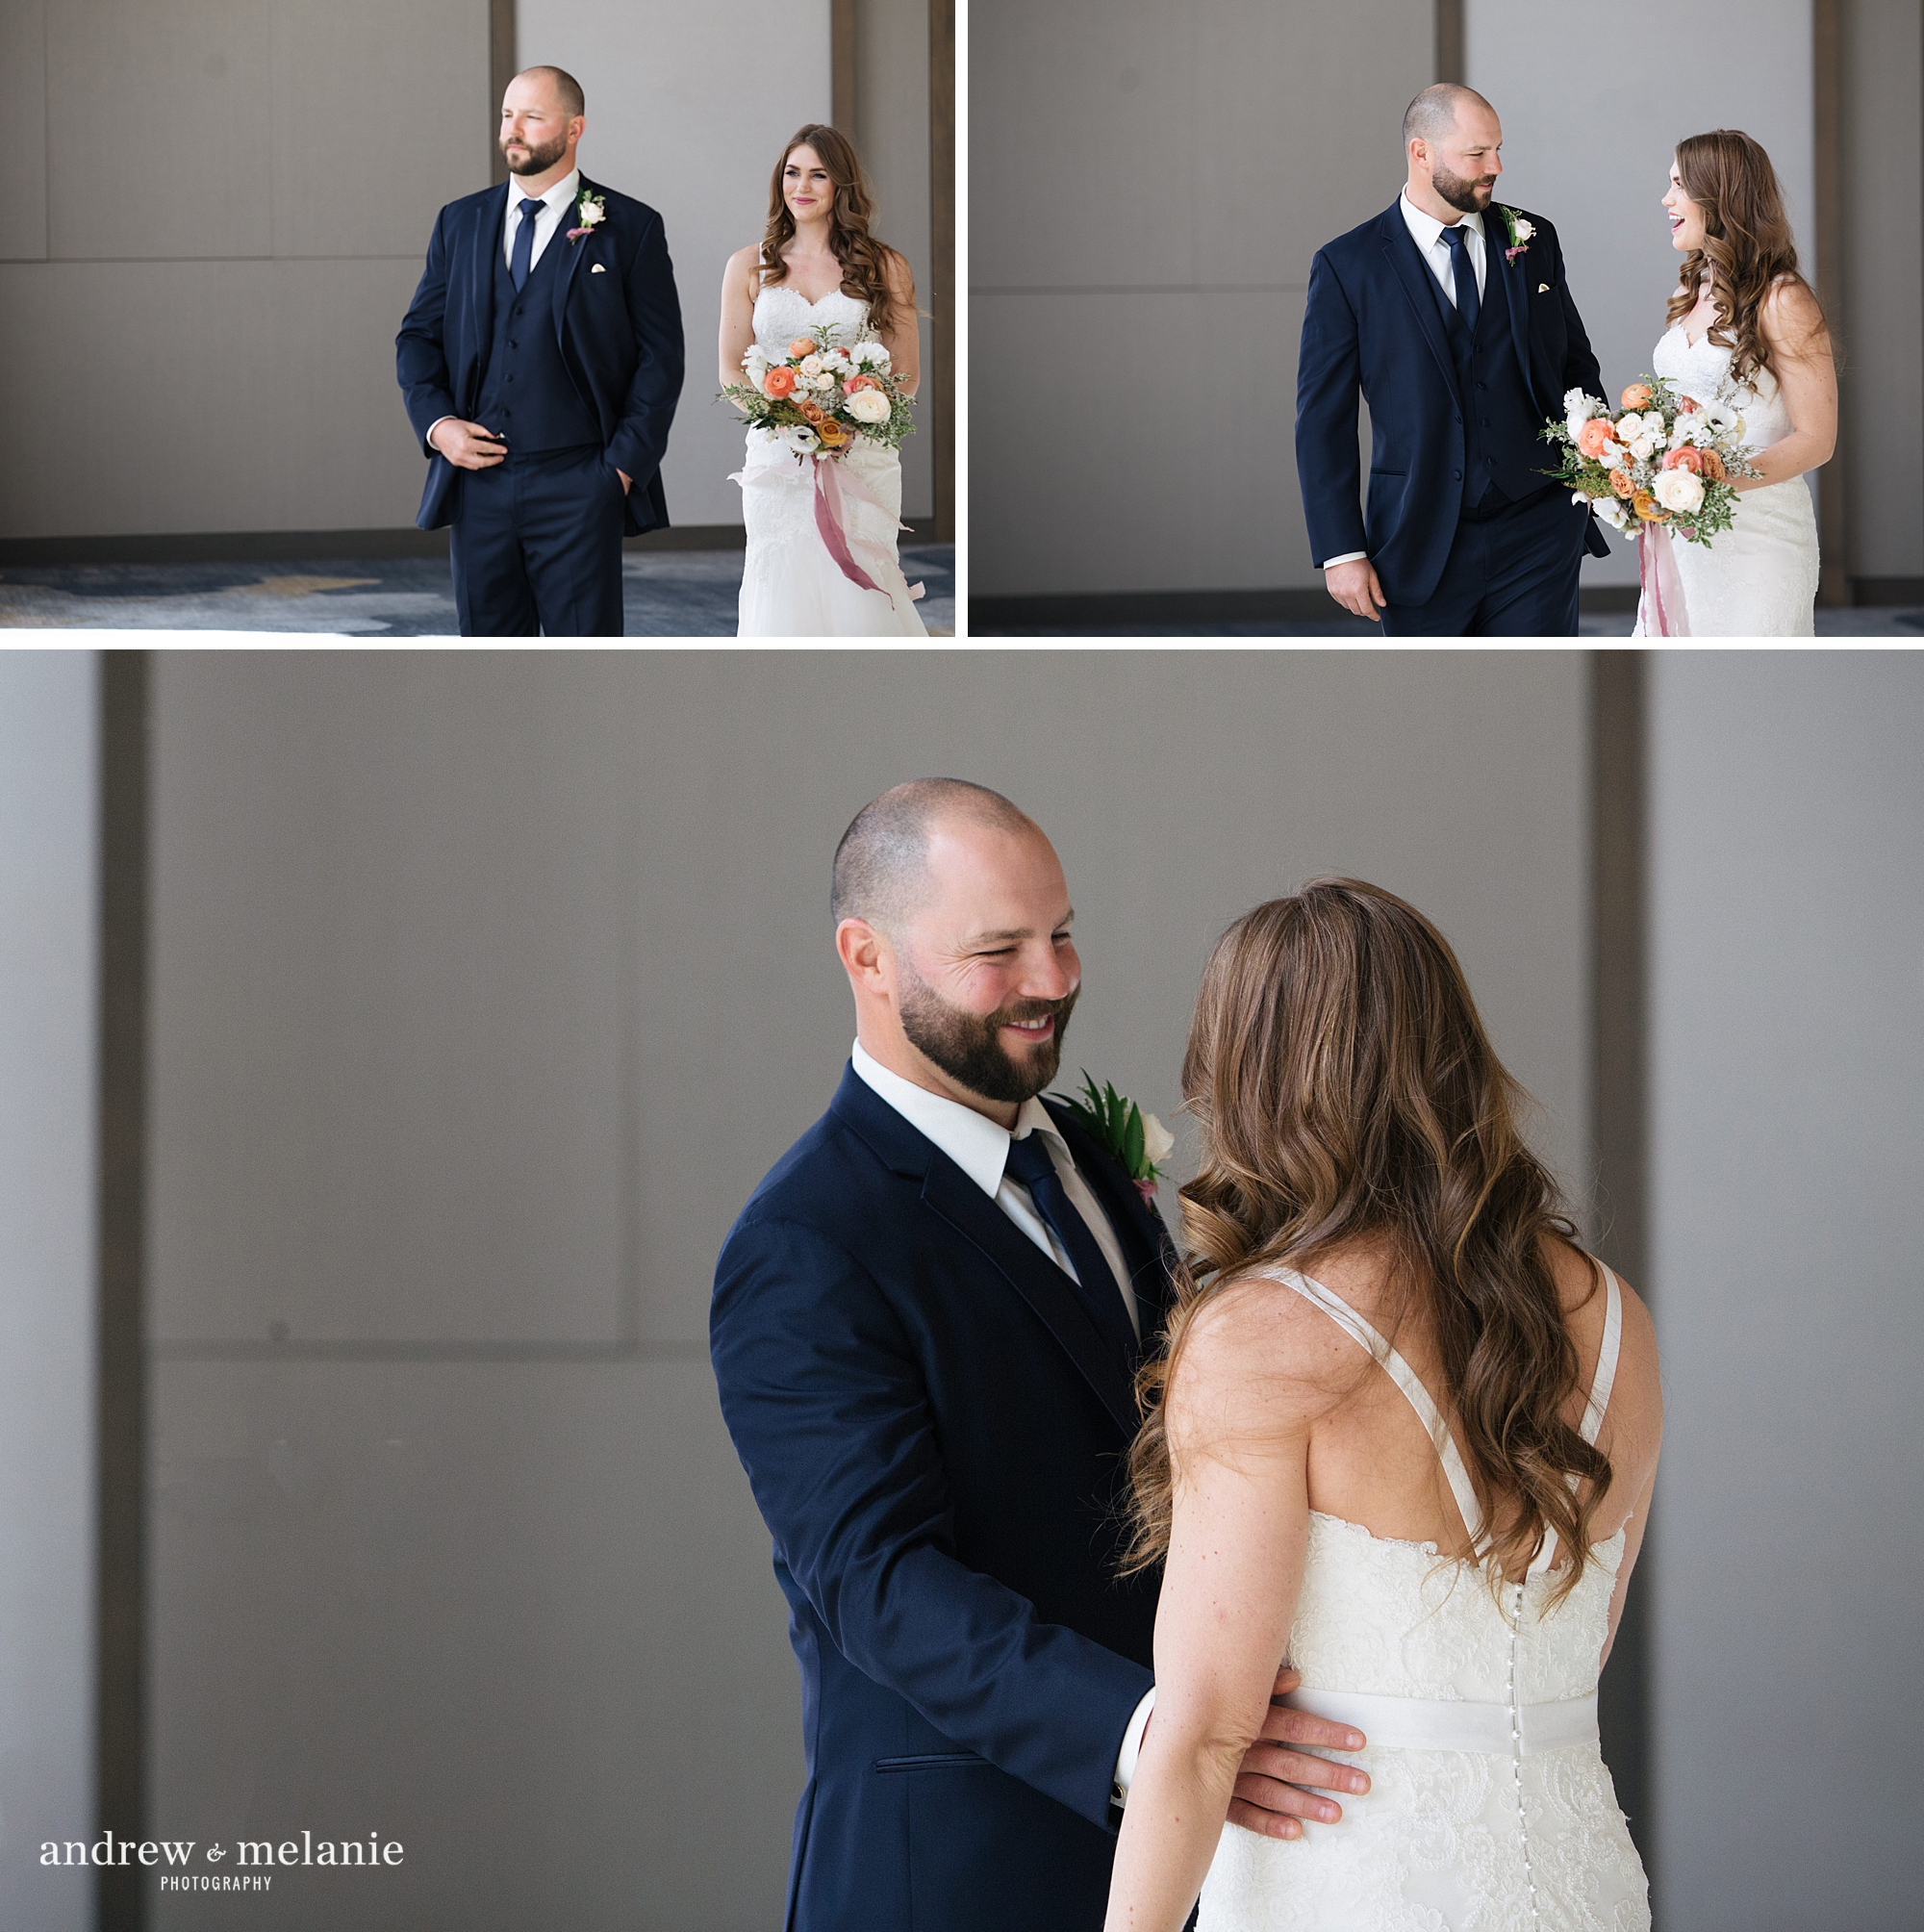 First look wedding photos